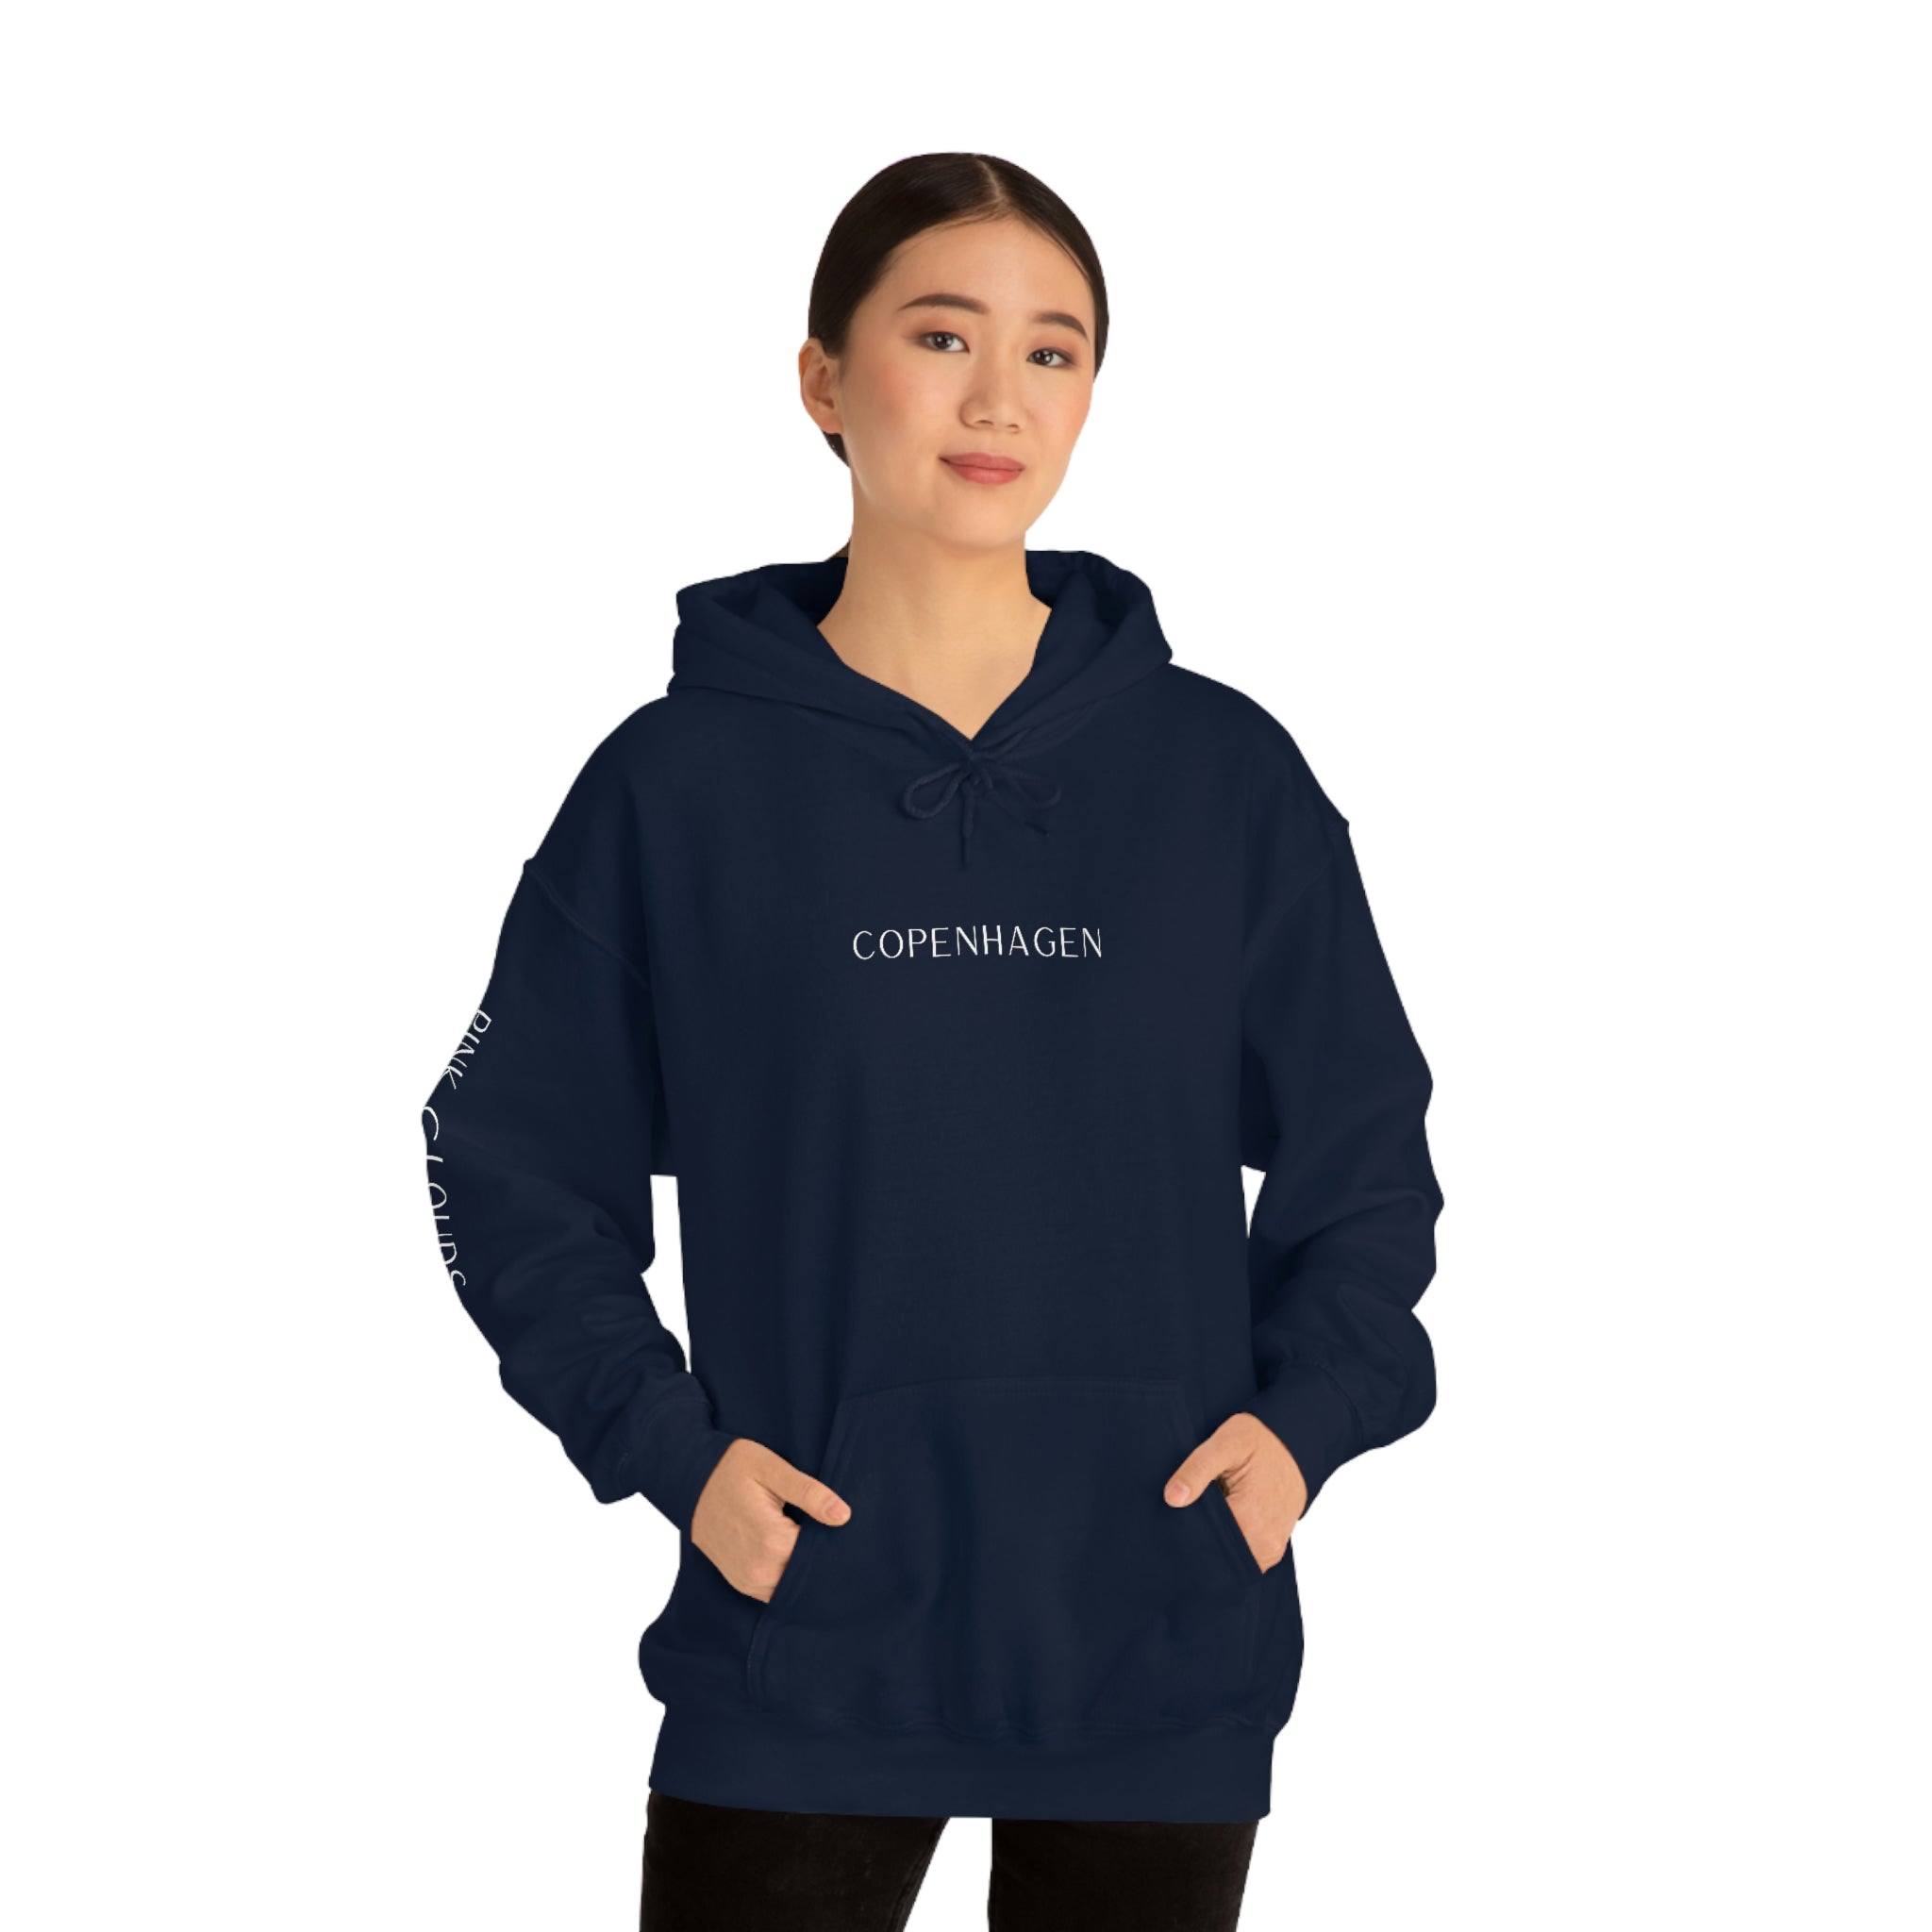 COPENHAGEN - Unisex Heavy Blend™ Hooded Sweatshirt